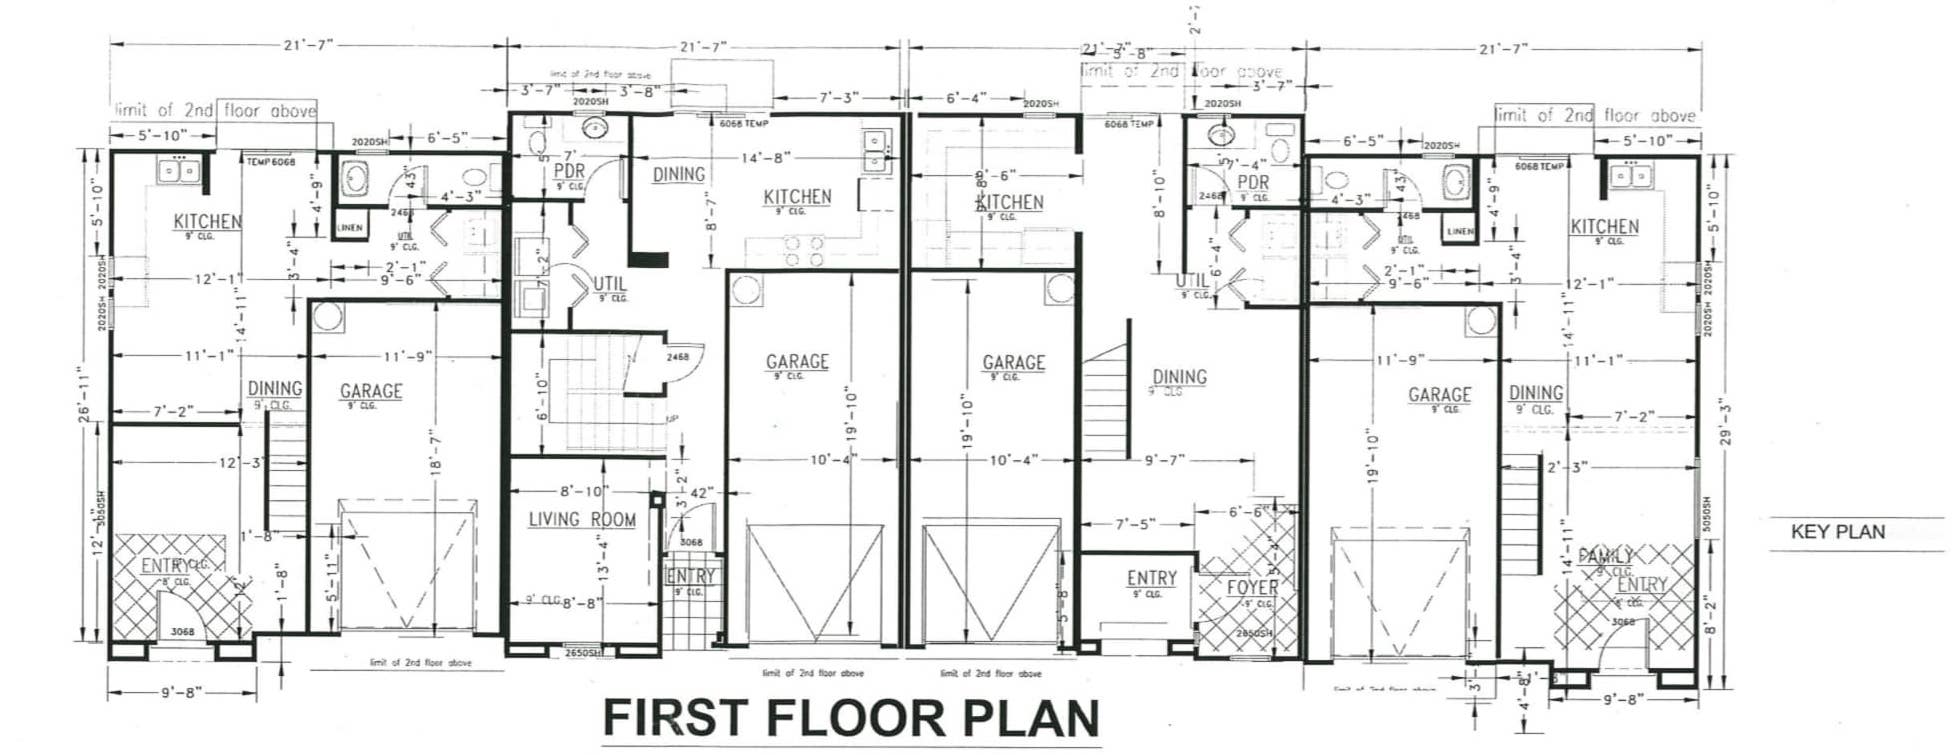 3871 12th Avenue First Floor Plan